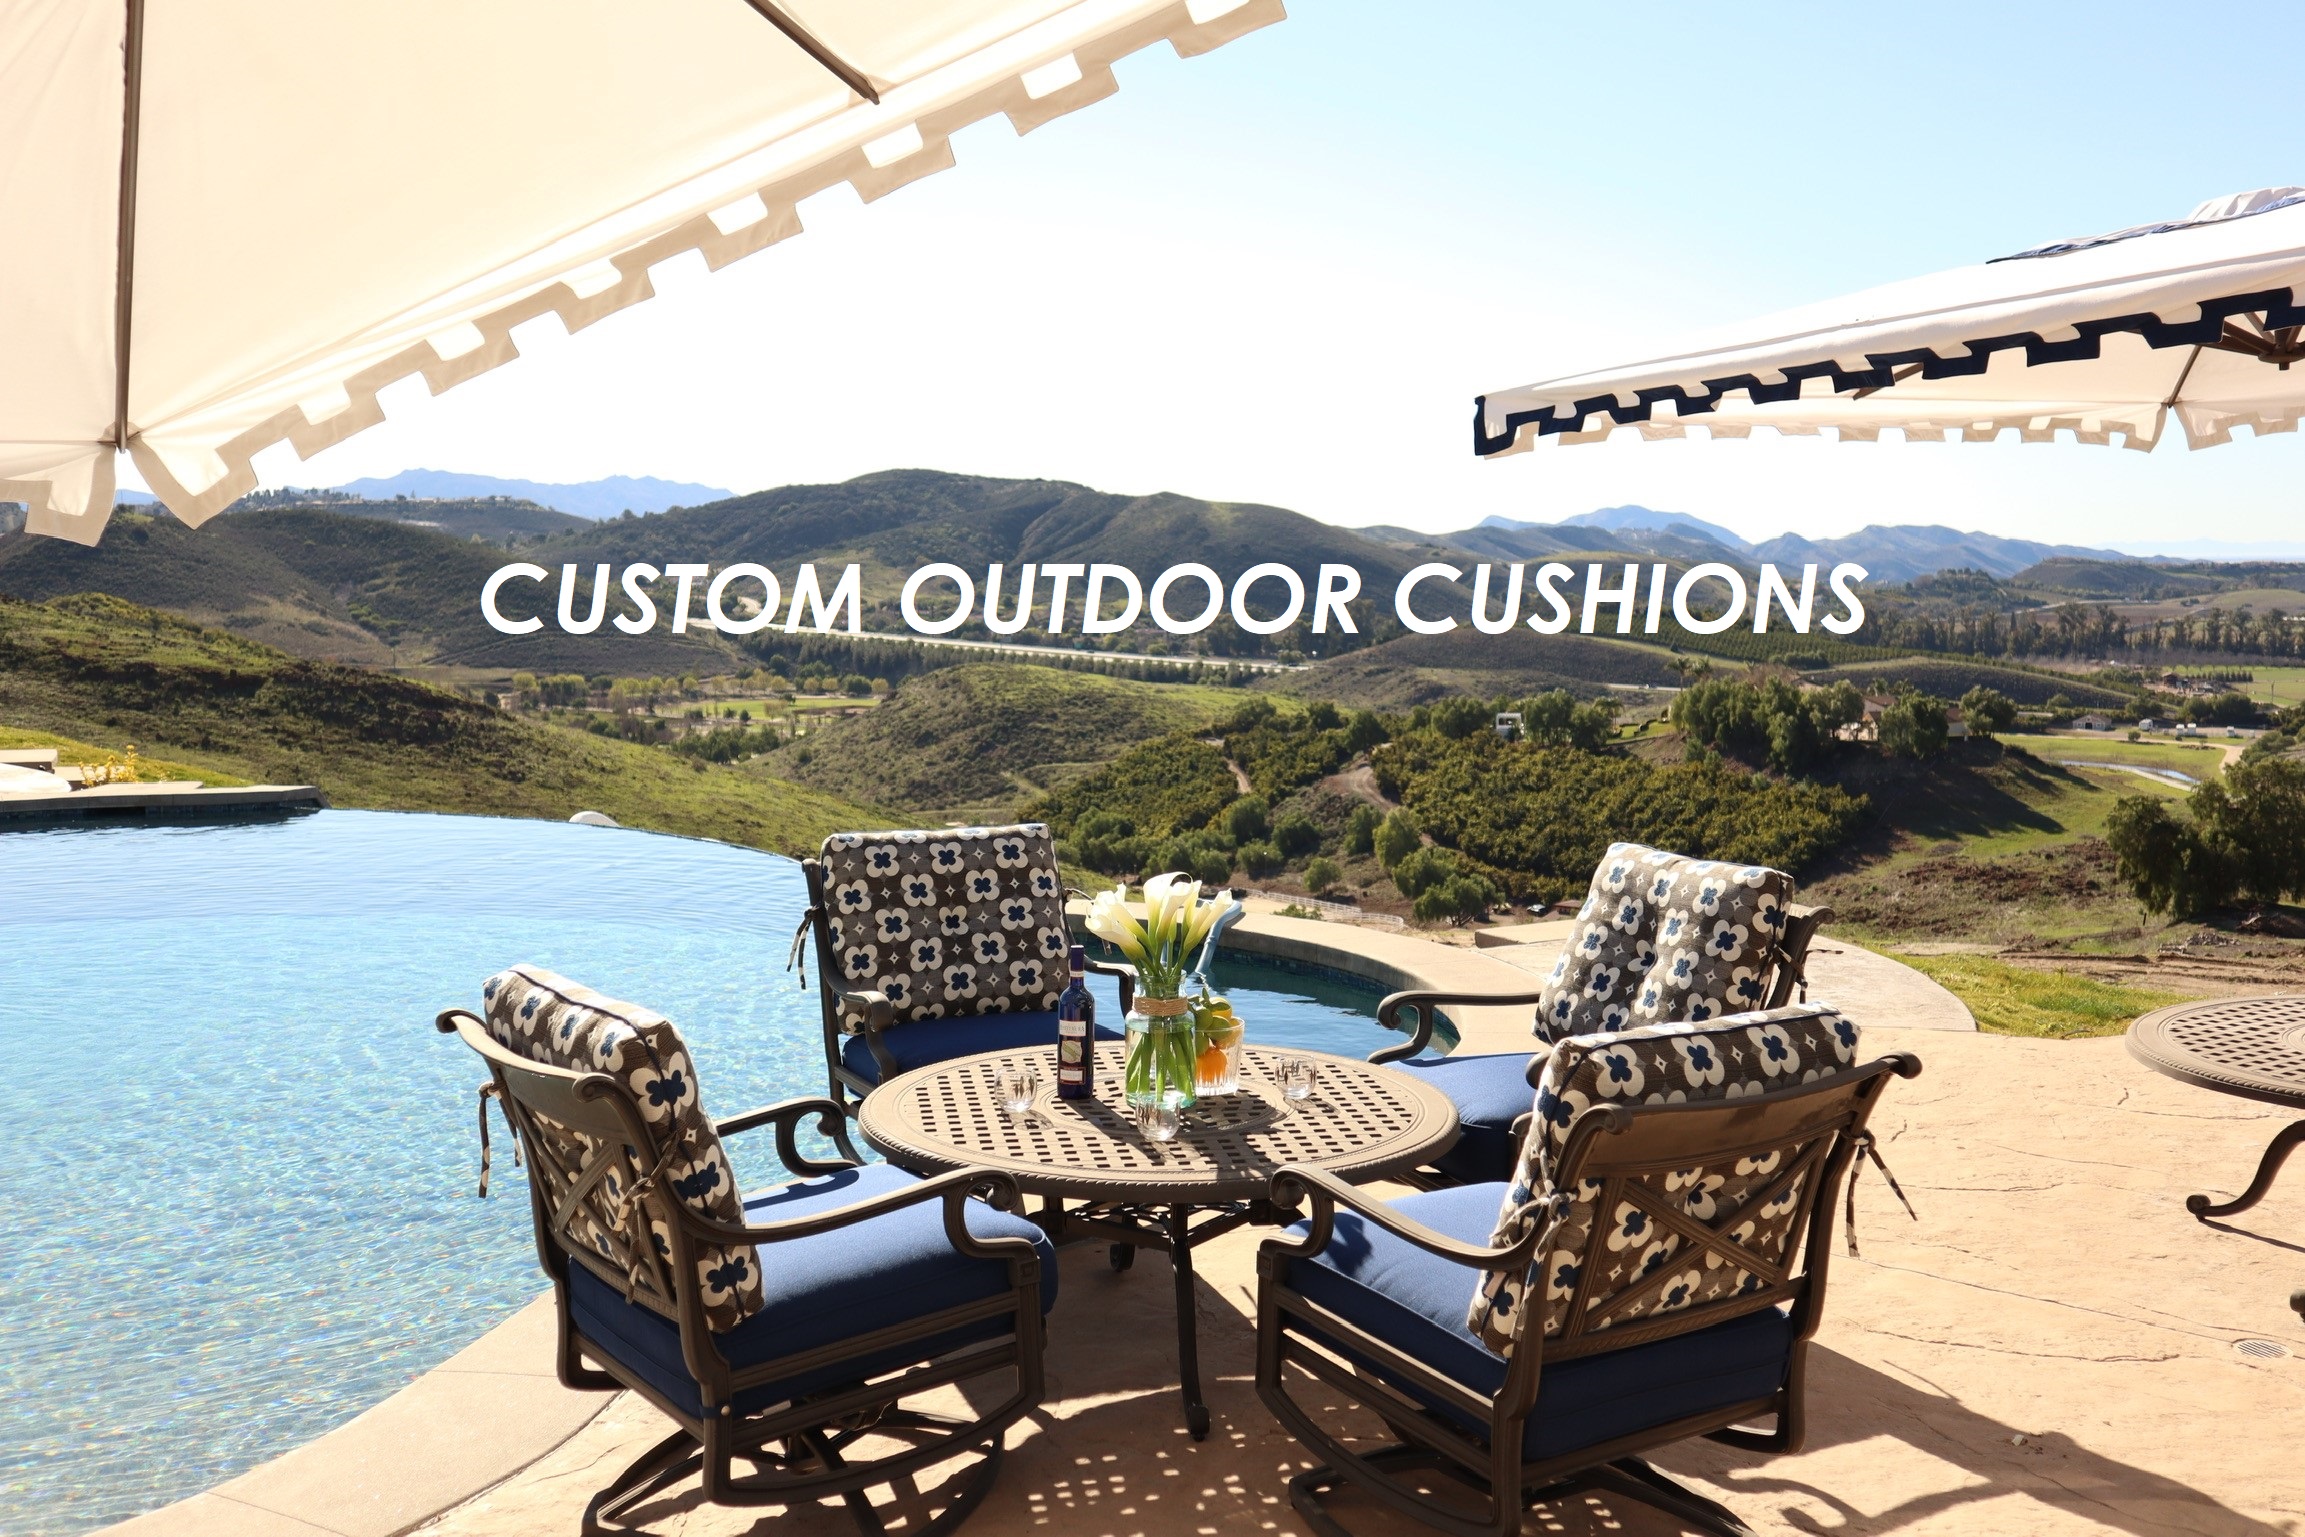 https://www.cushioncorner.com/assets/images/custom-outdoor-cushions-new.jpg